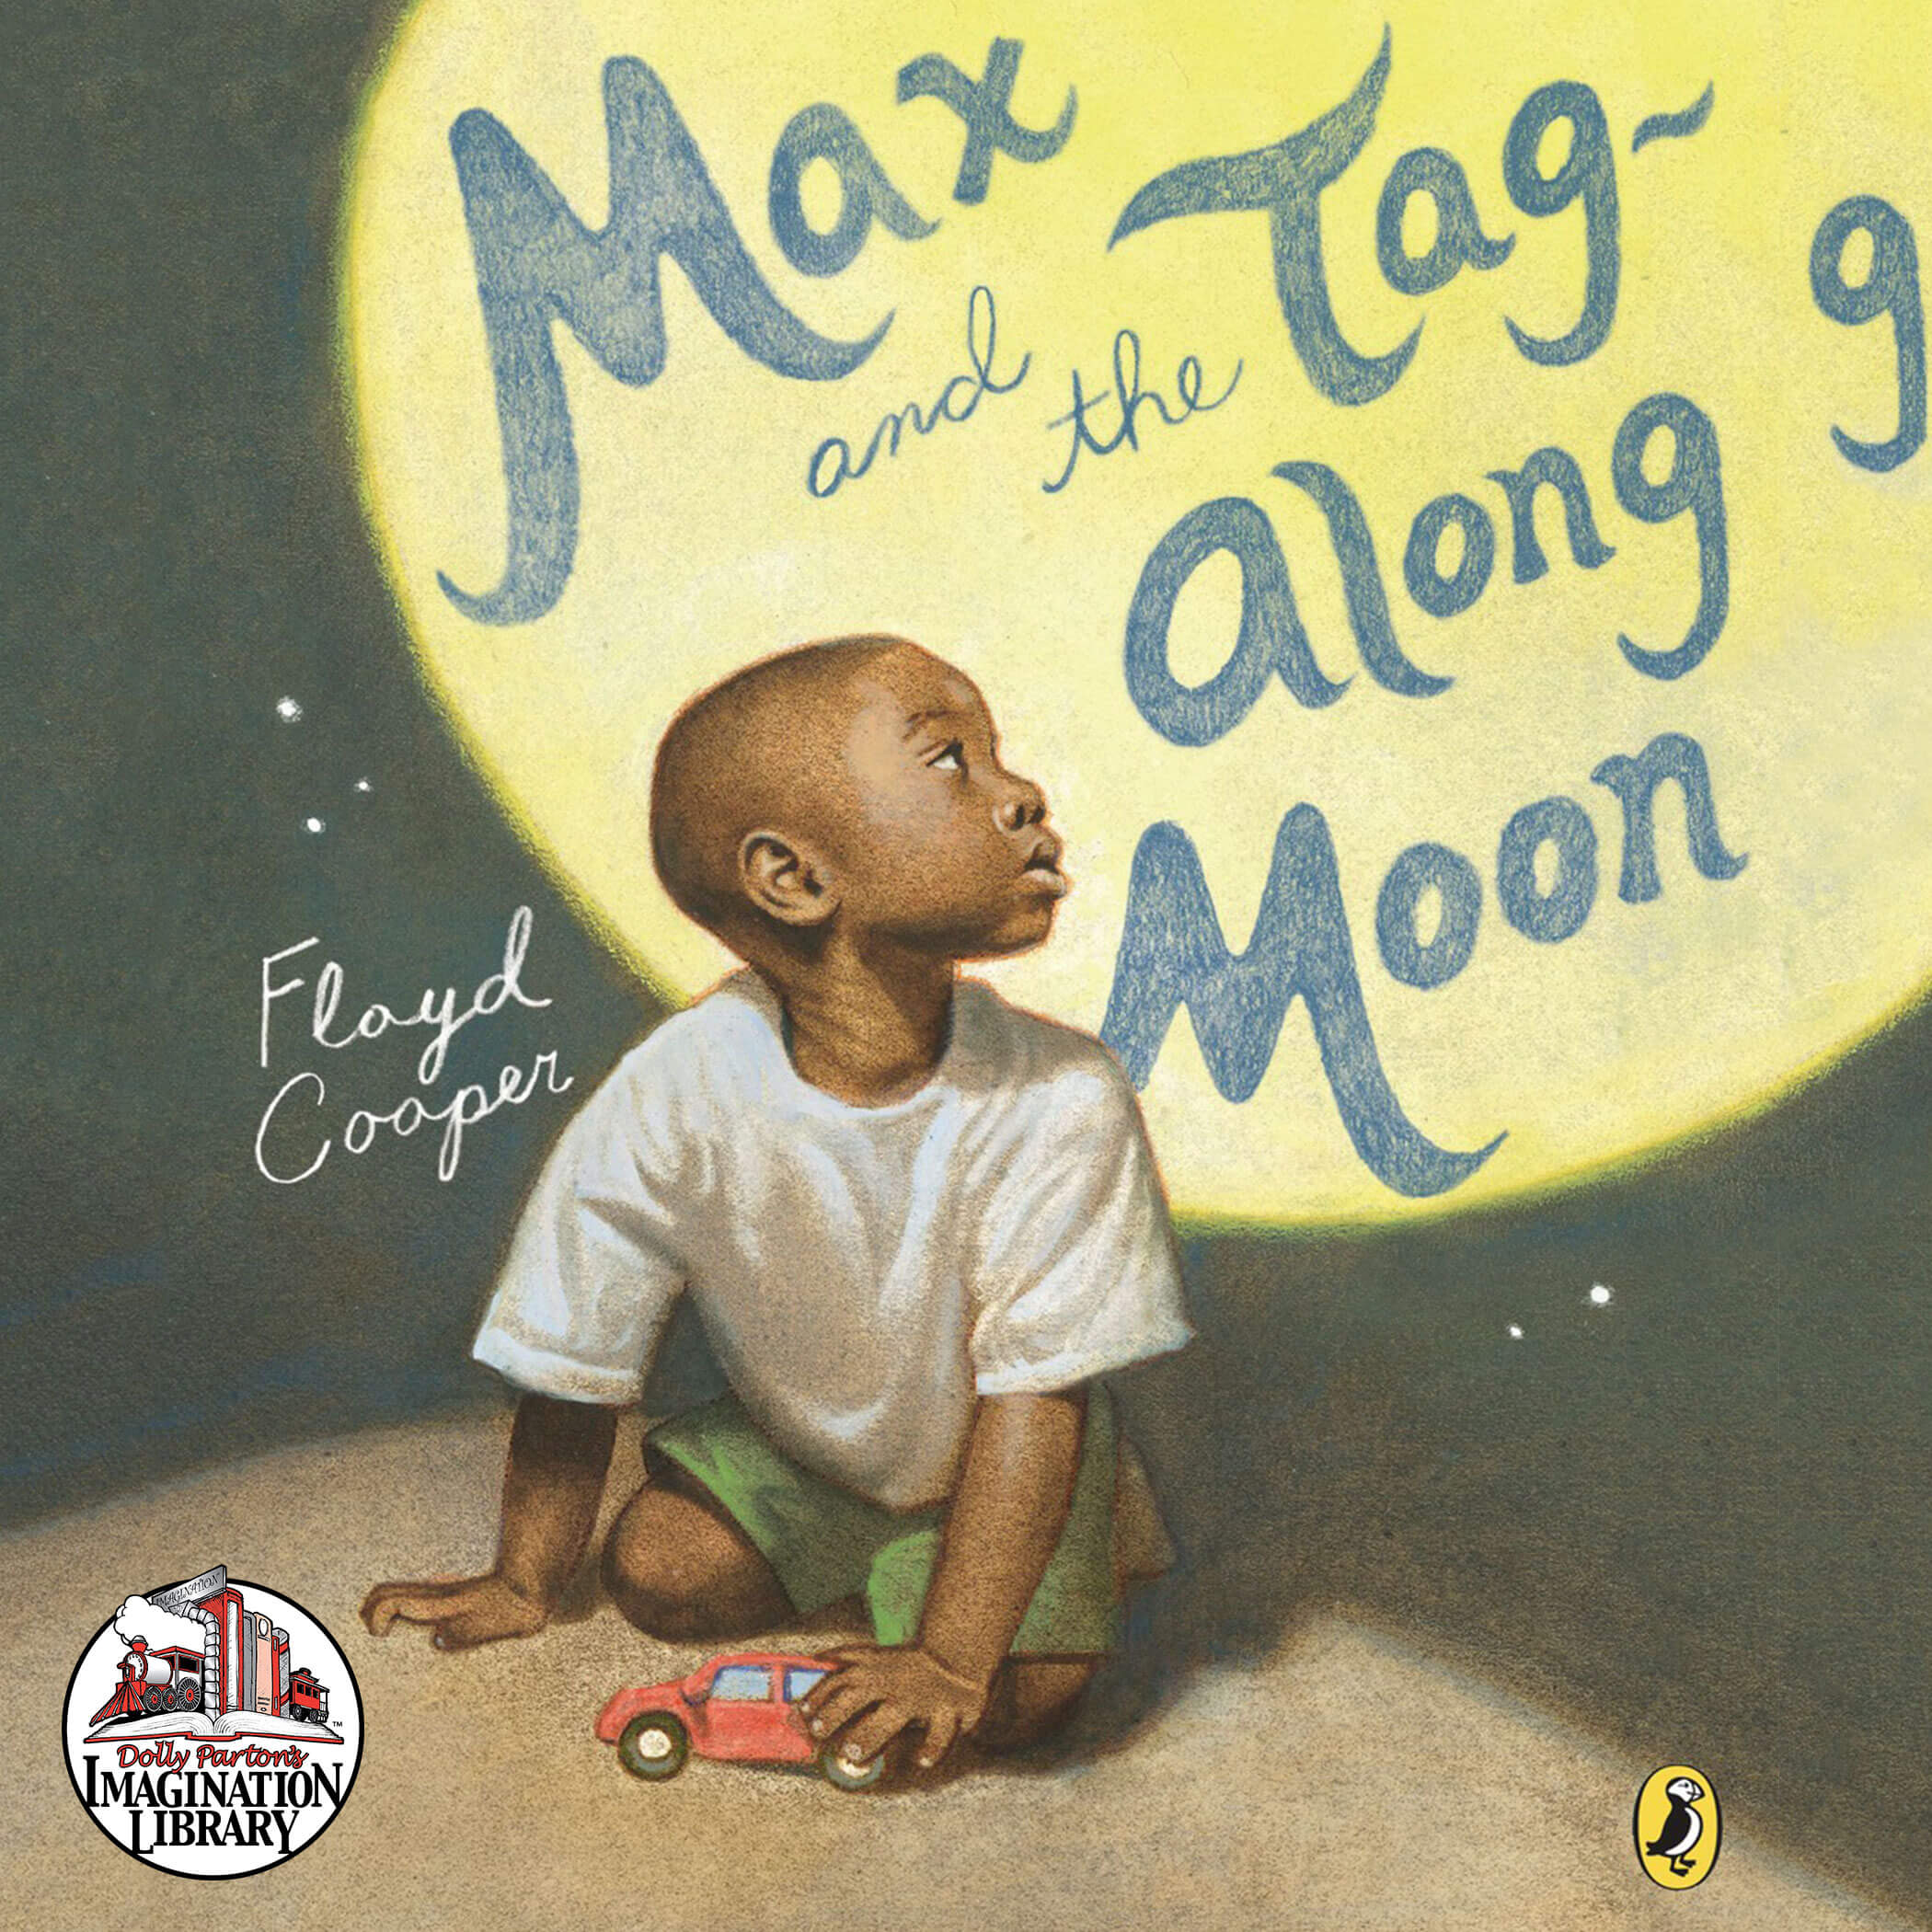 Max and the Tag along Moon - Penguin Random House